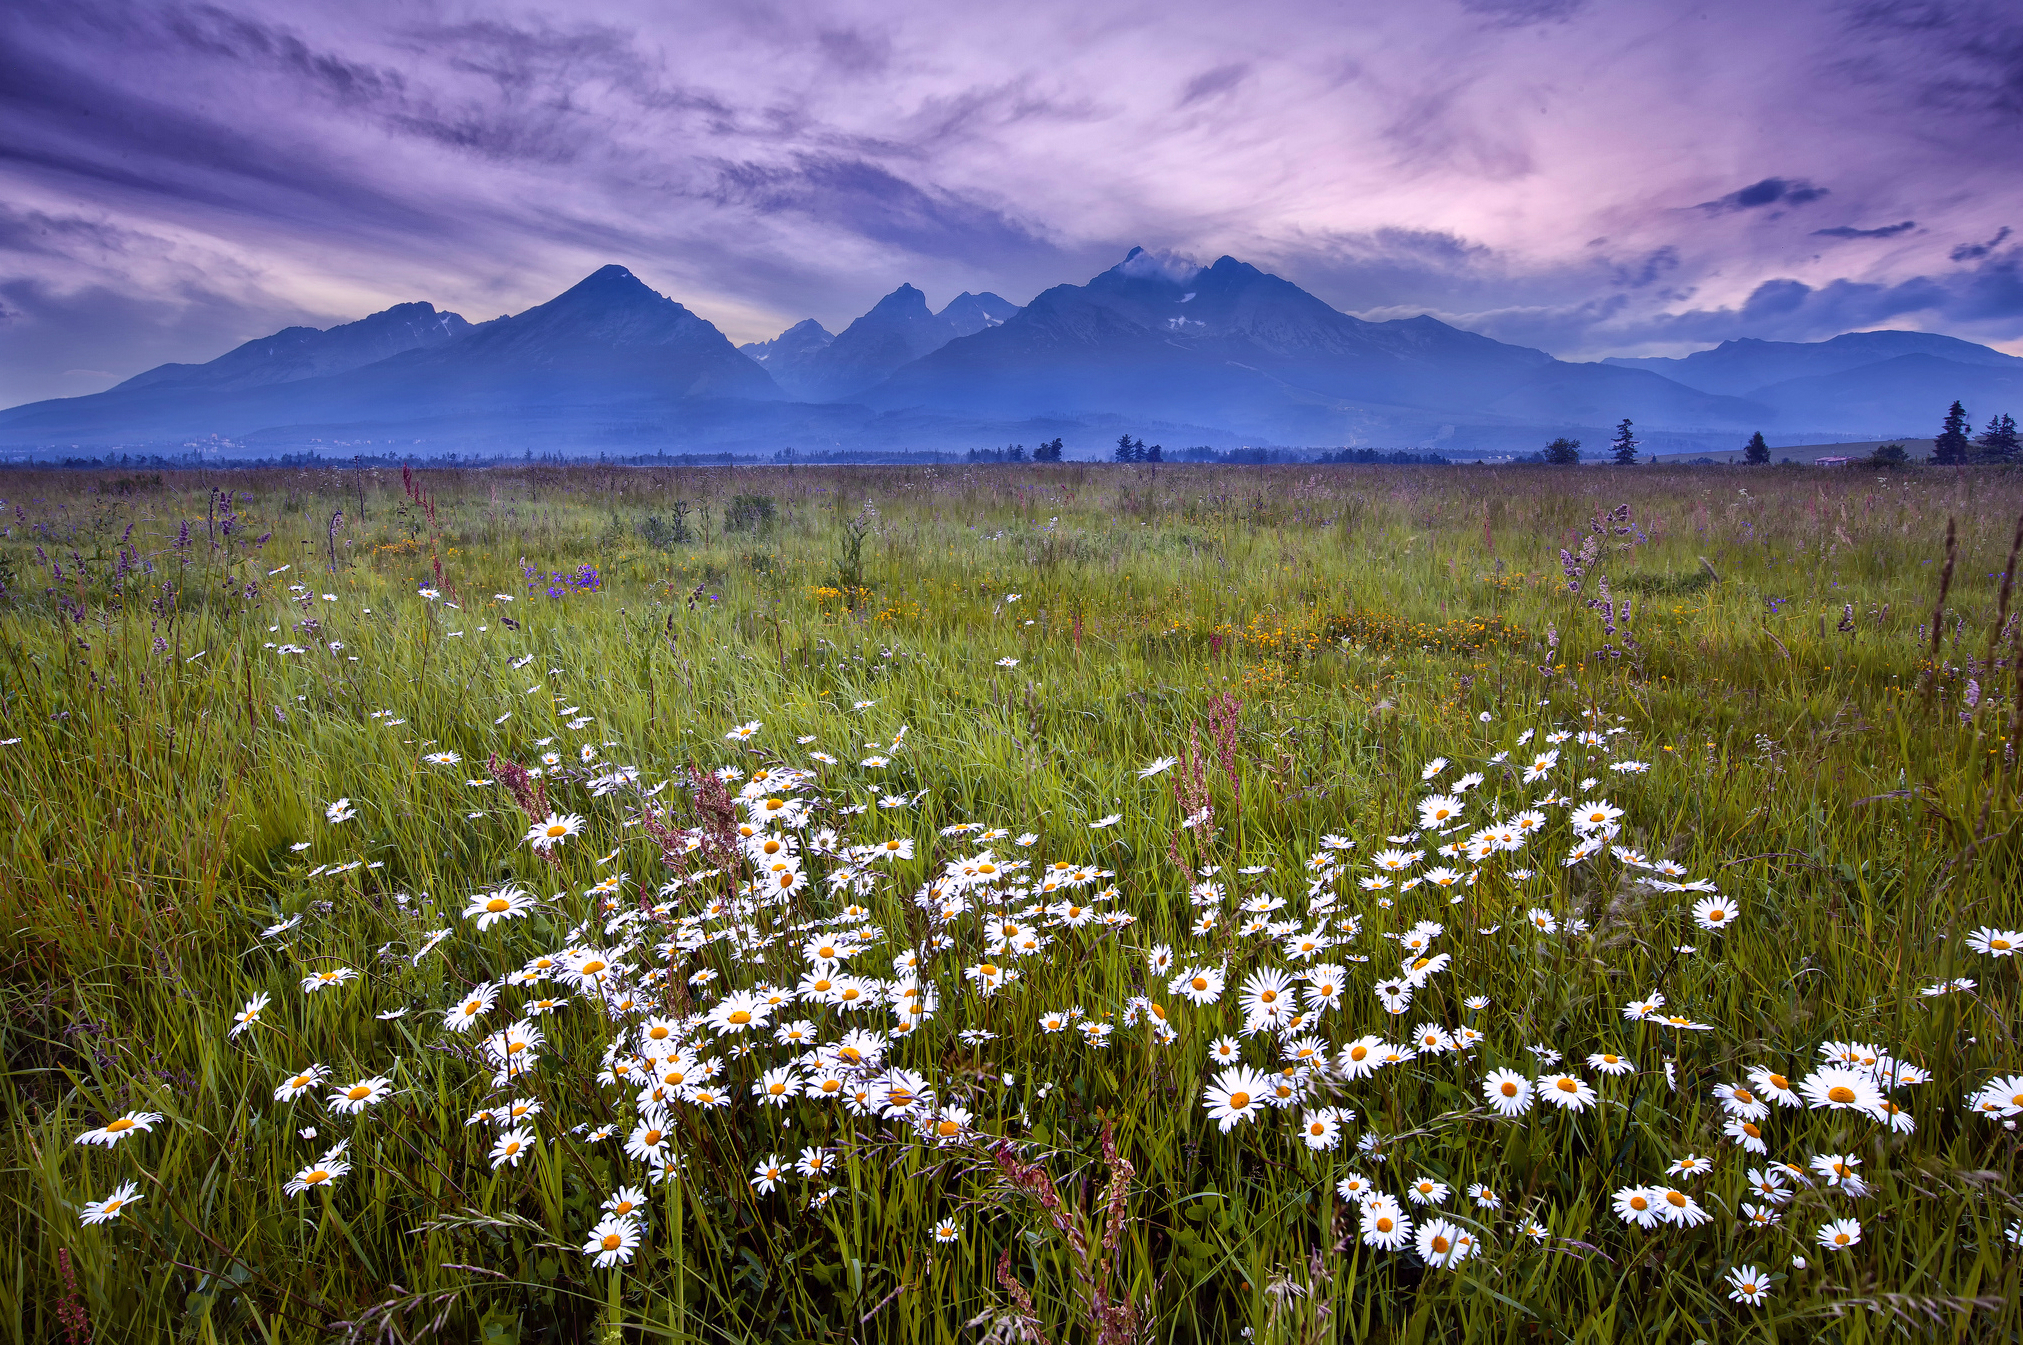 tatra, Mountains, Grass, Flowers, Daisies, Mountains, Evening, Lilac, Sky, Clouds, Landscape Wallpaper